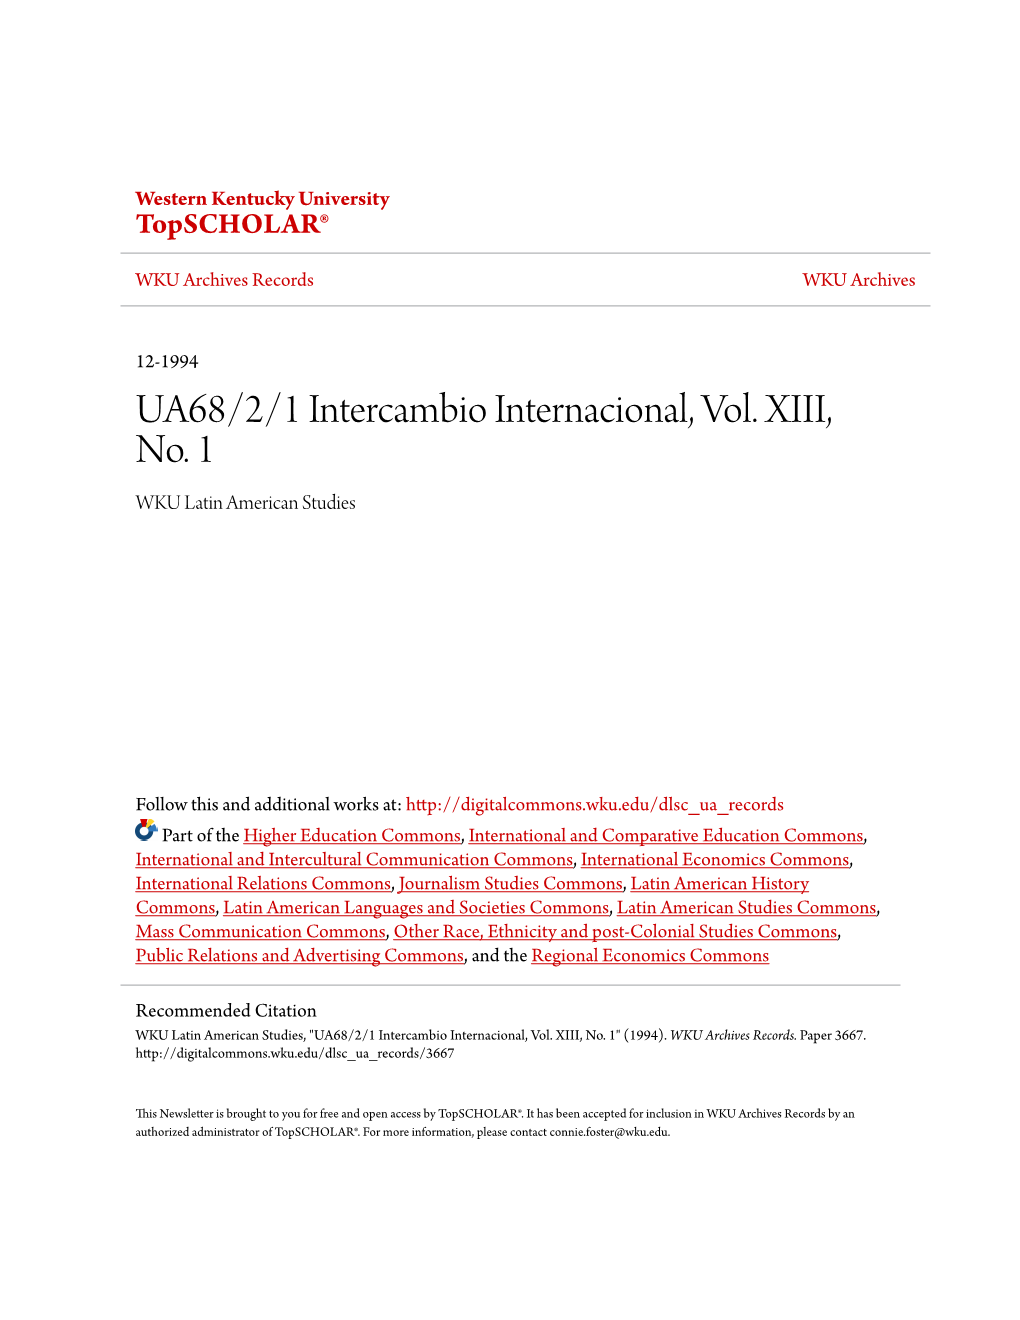 UA68/2/1 Intercambio Internacional, Vol. XIII, No. 1 WKU Latin American Studies